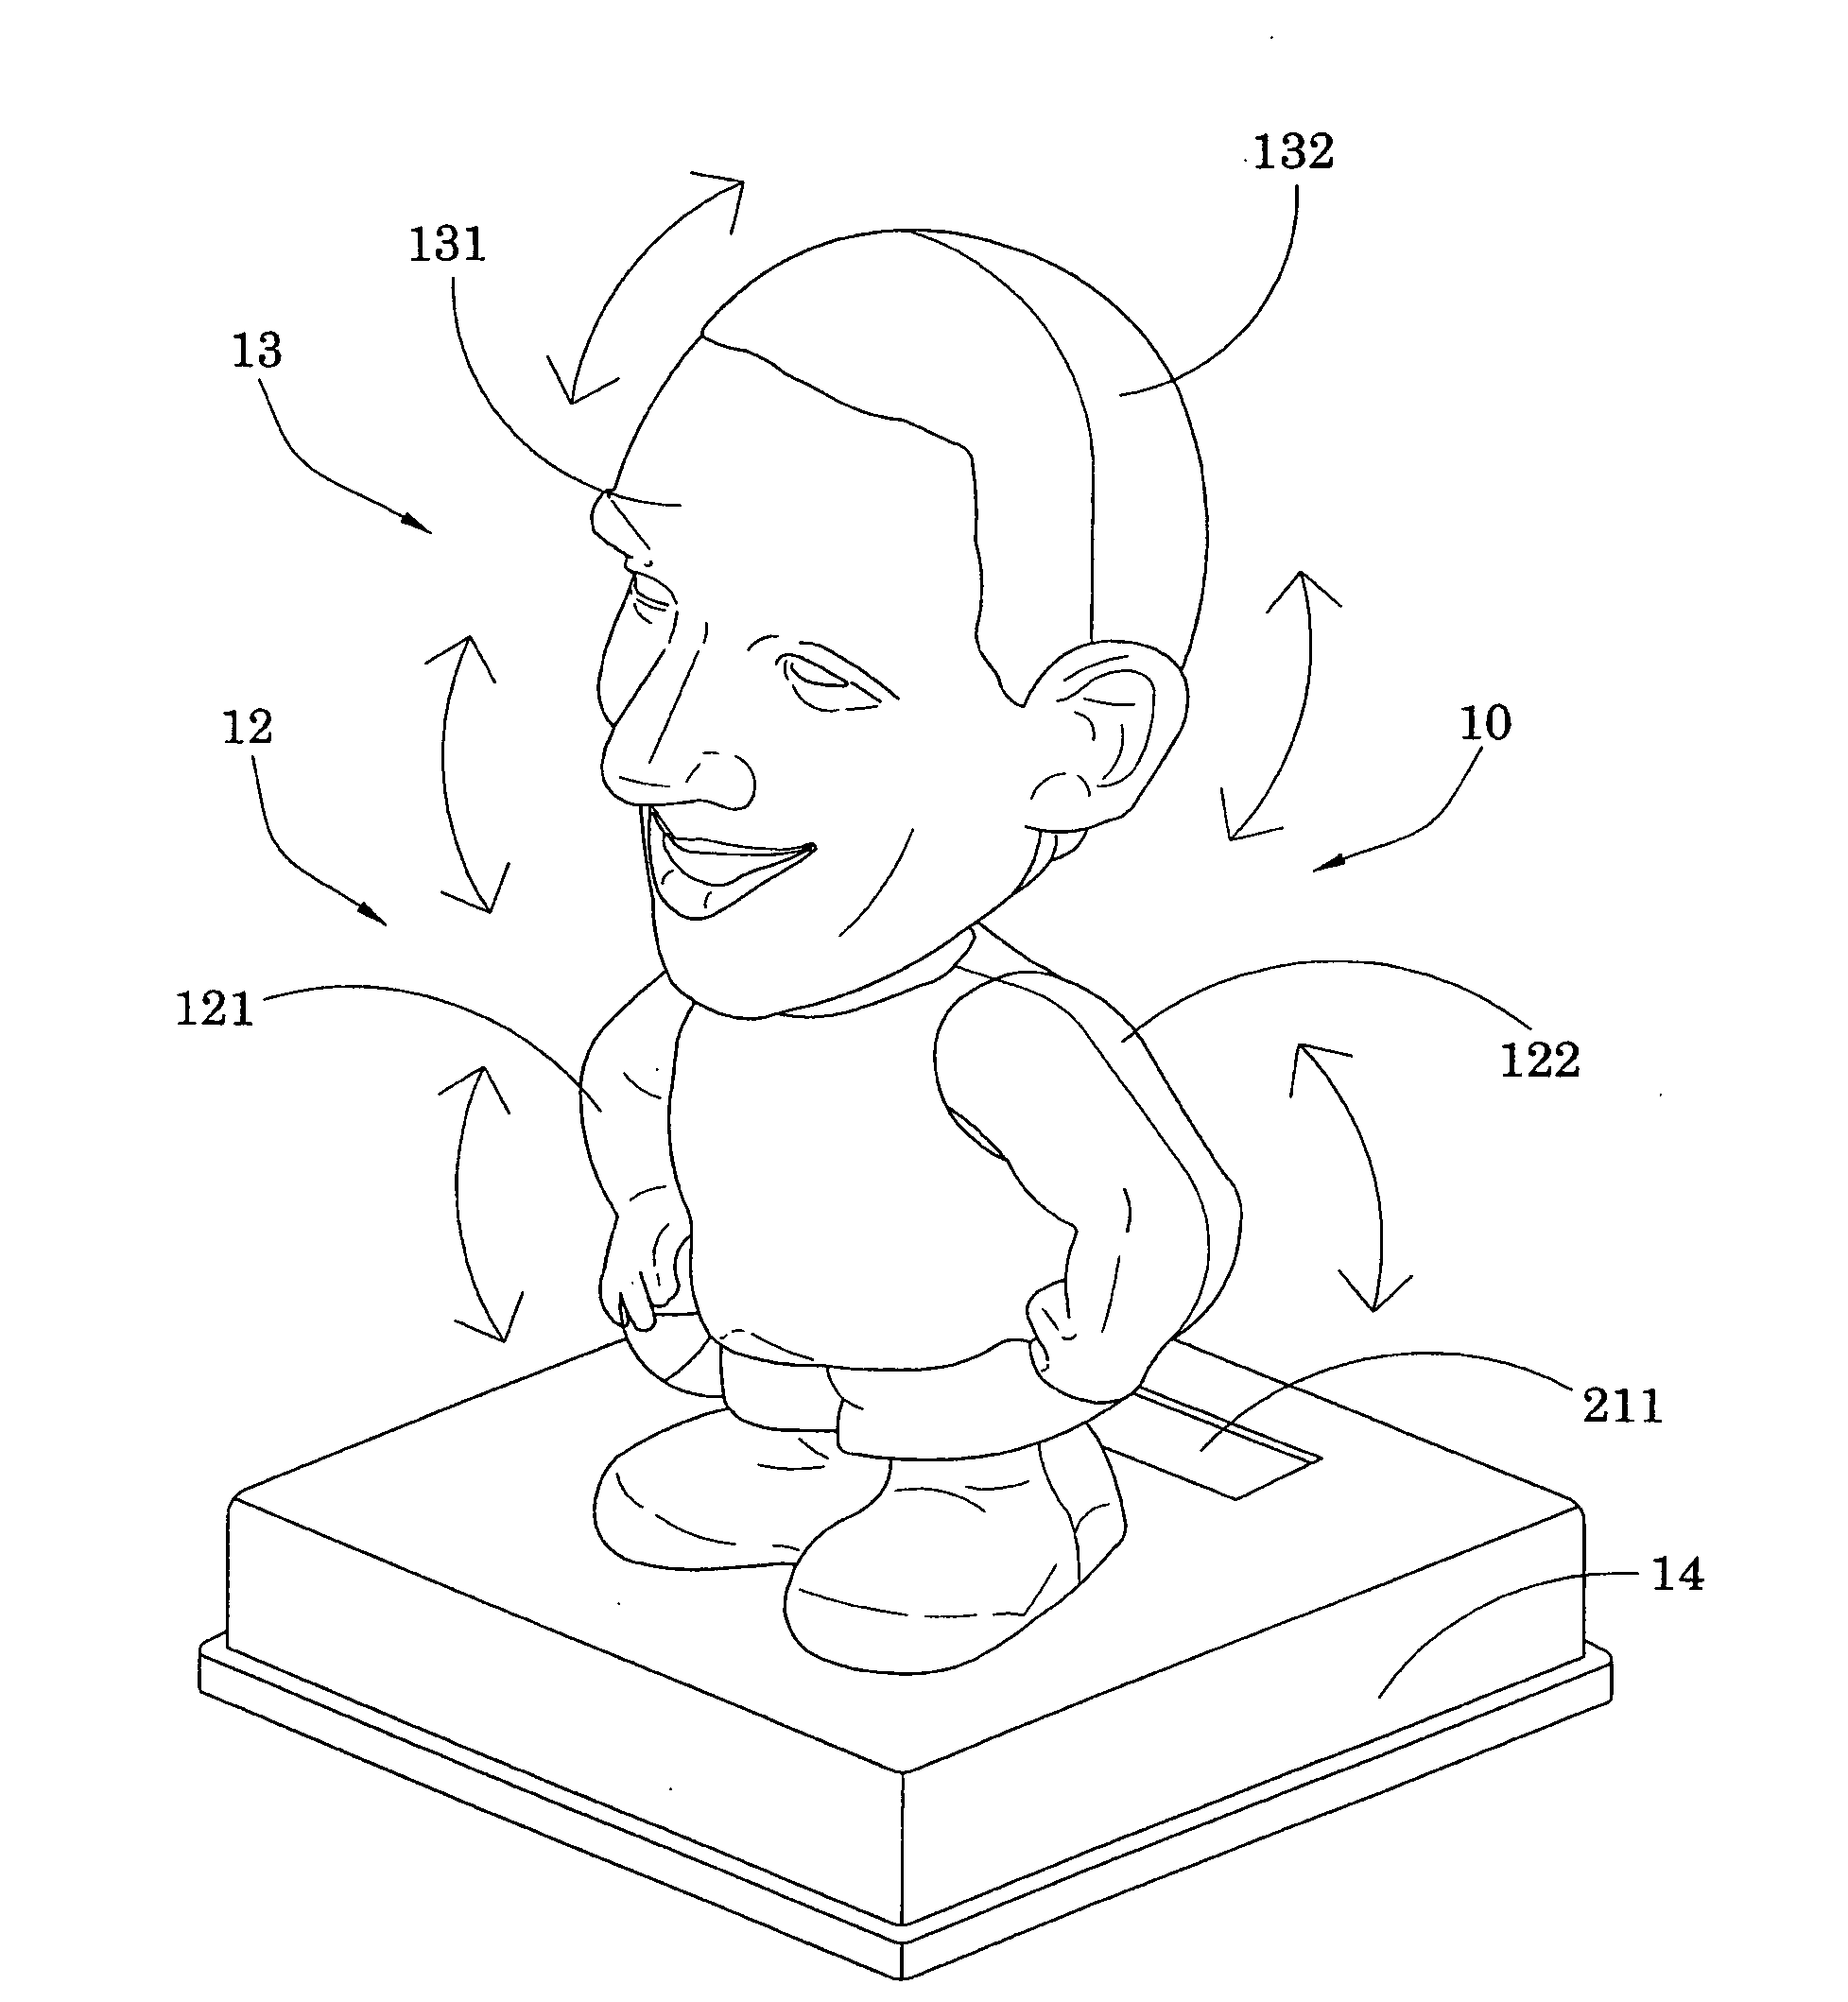 Portable power-free motion figure